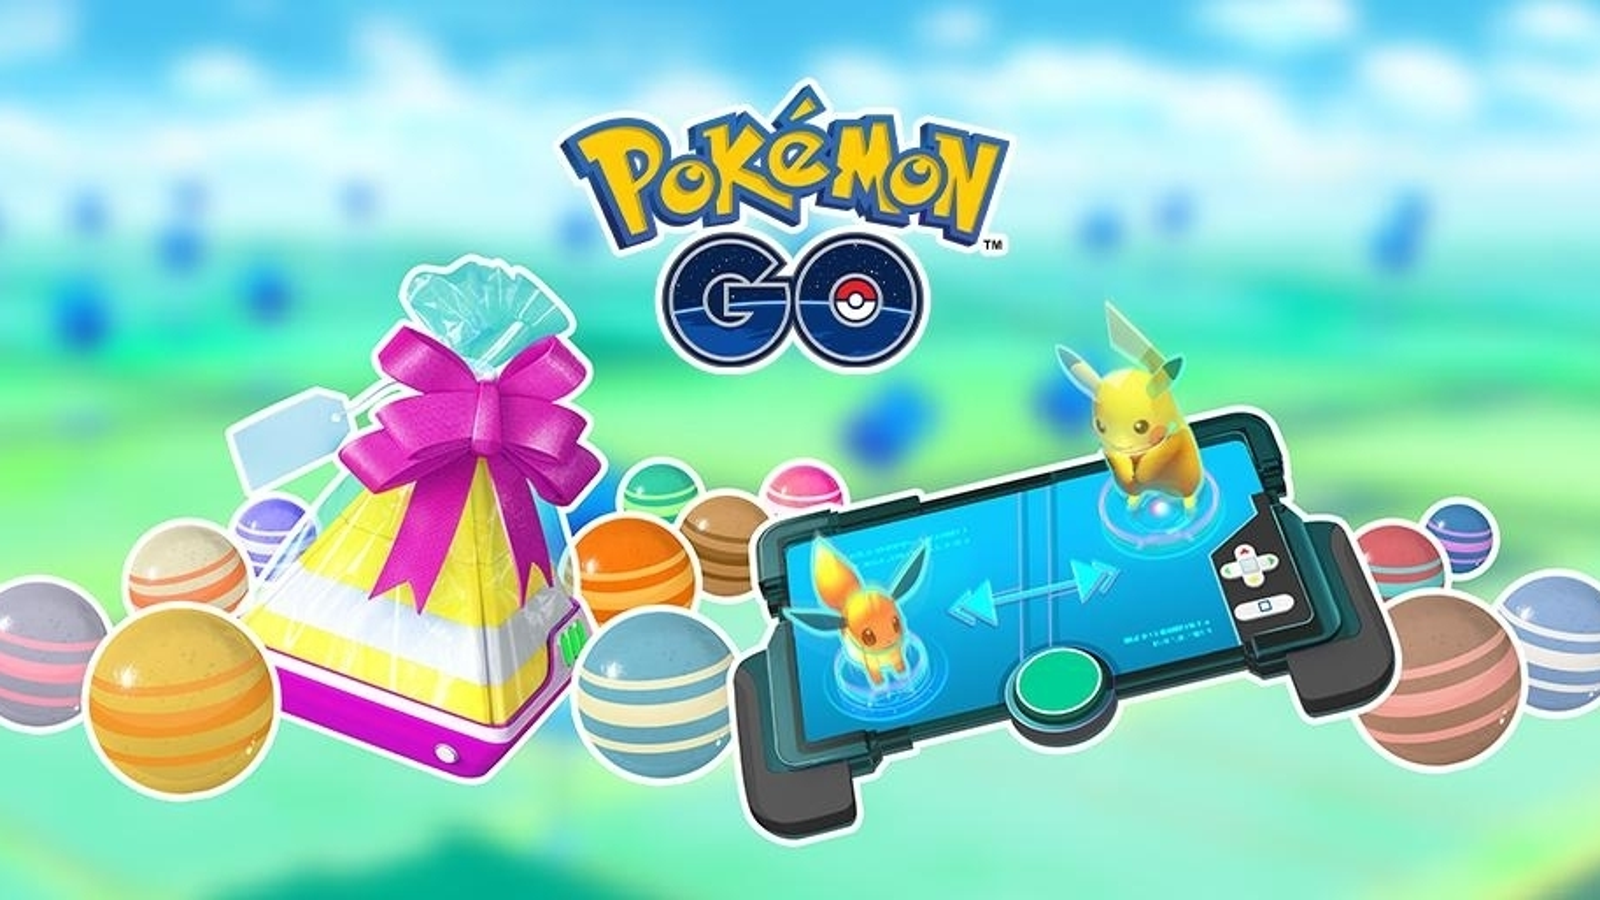 Pokemon GO Friend Code Sharing 2020 ✓ Get Ready for Pokemon GO